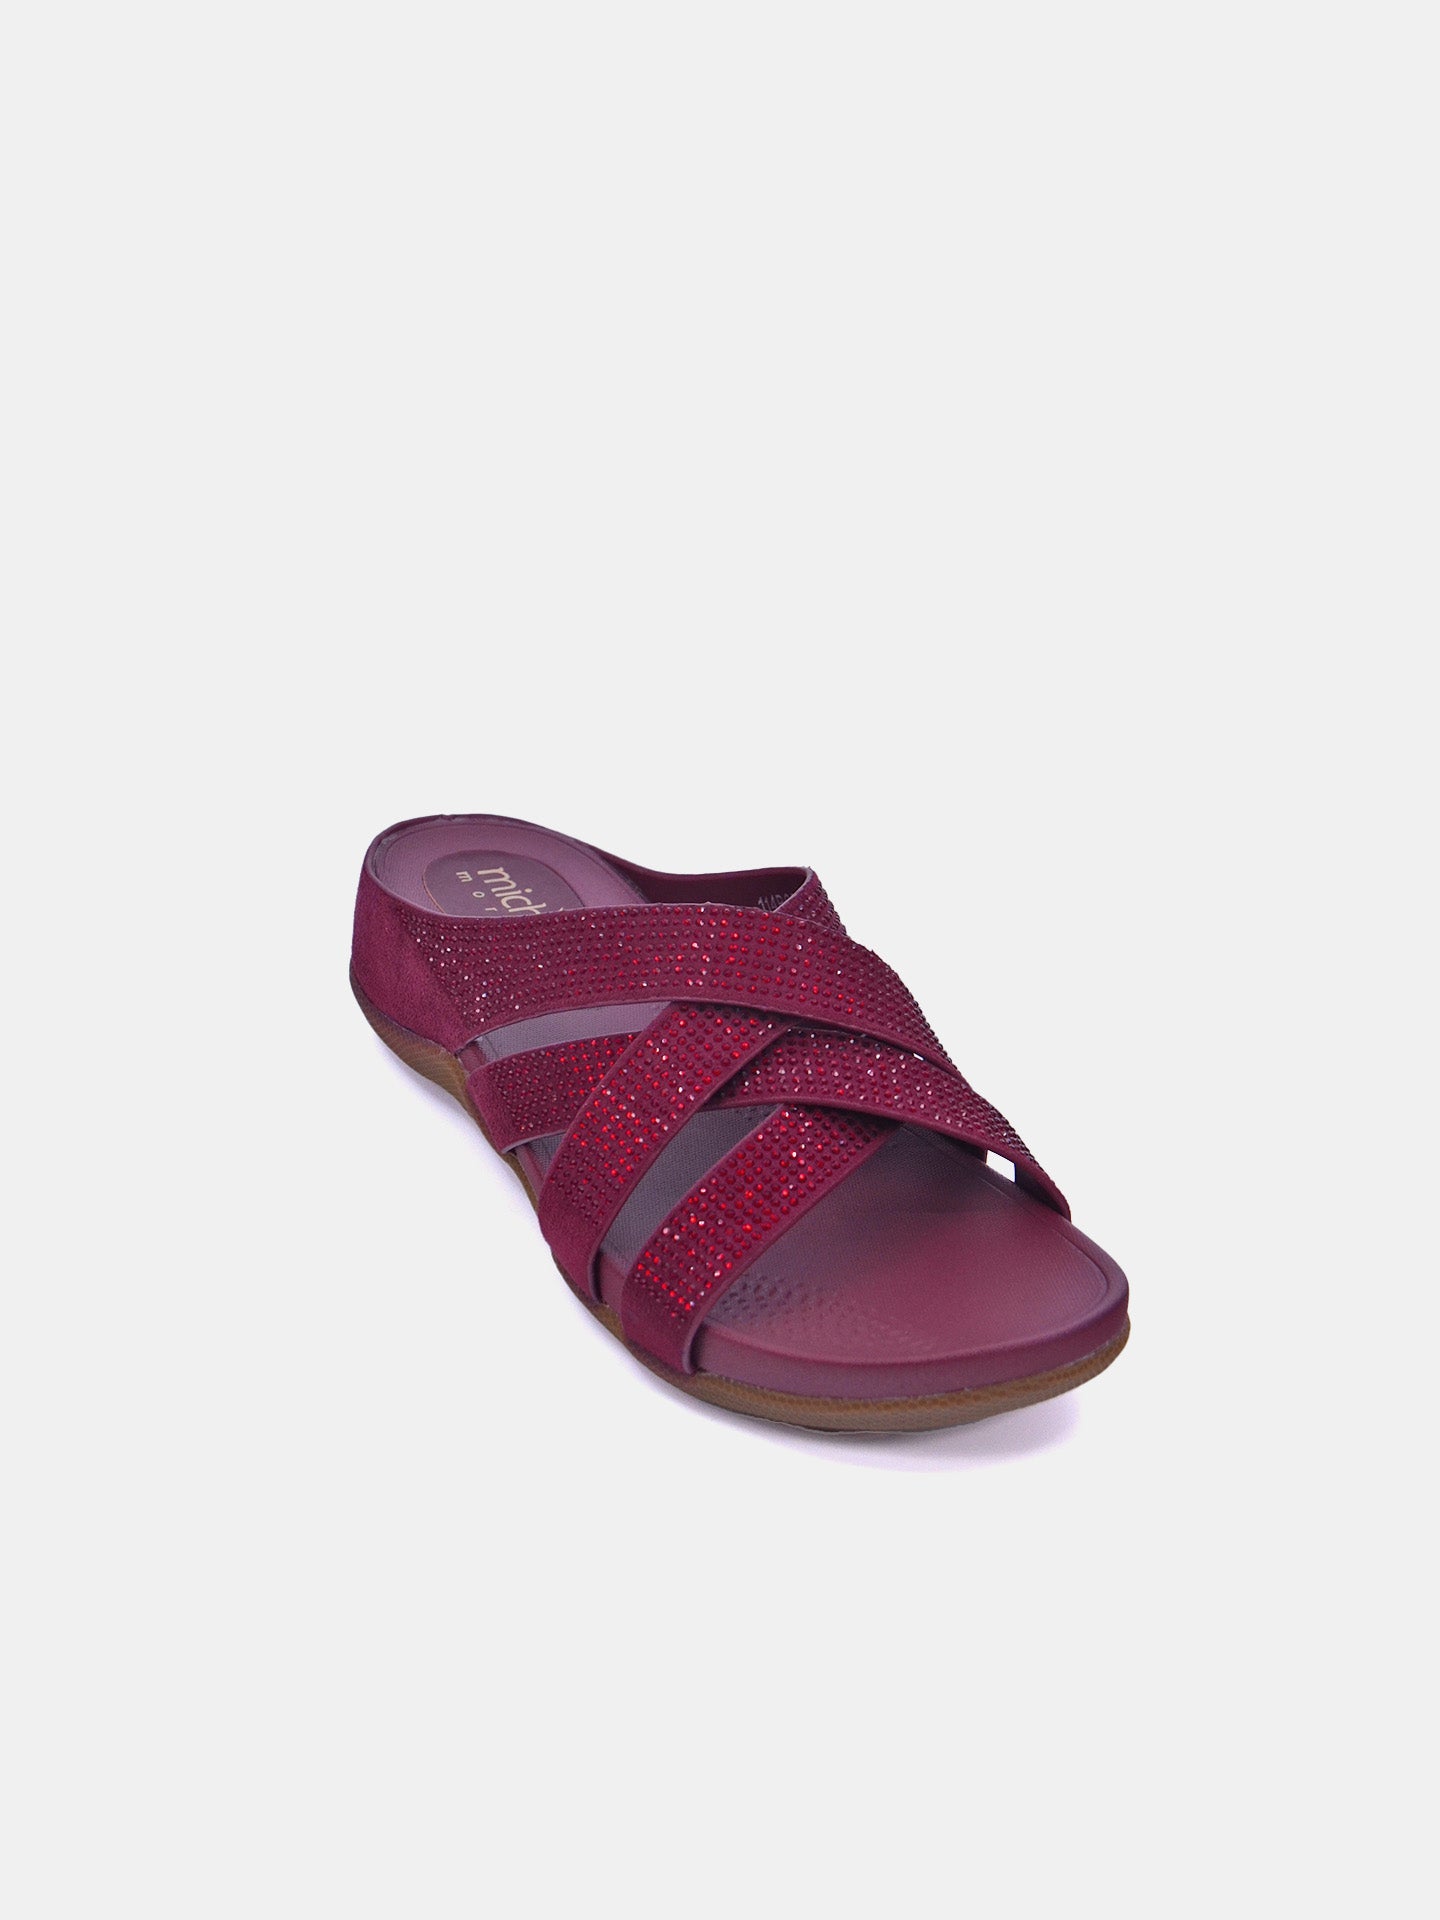 Michelle Morgan 114RC278 Women's Casual Sandals #color_Maroon